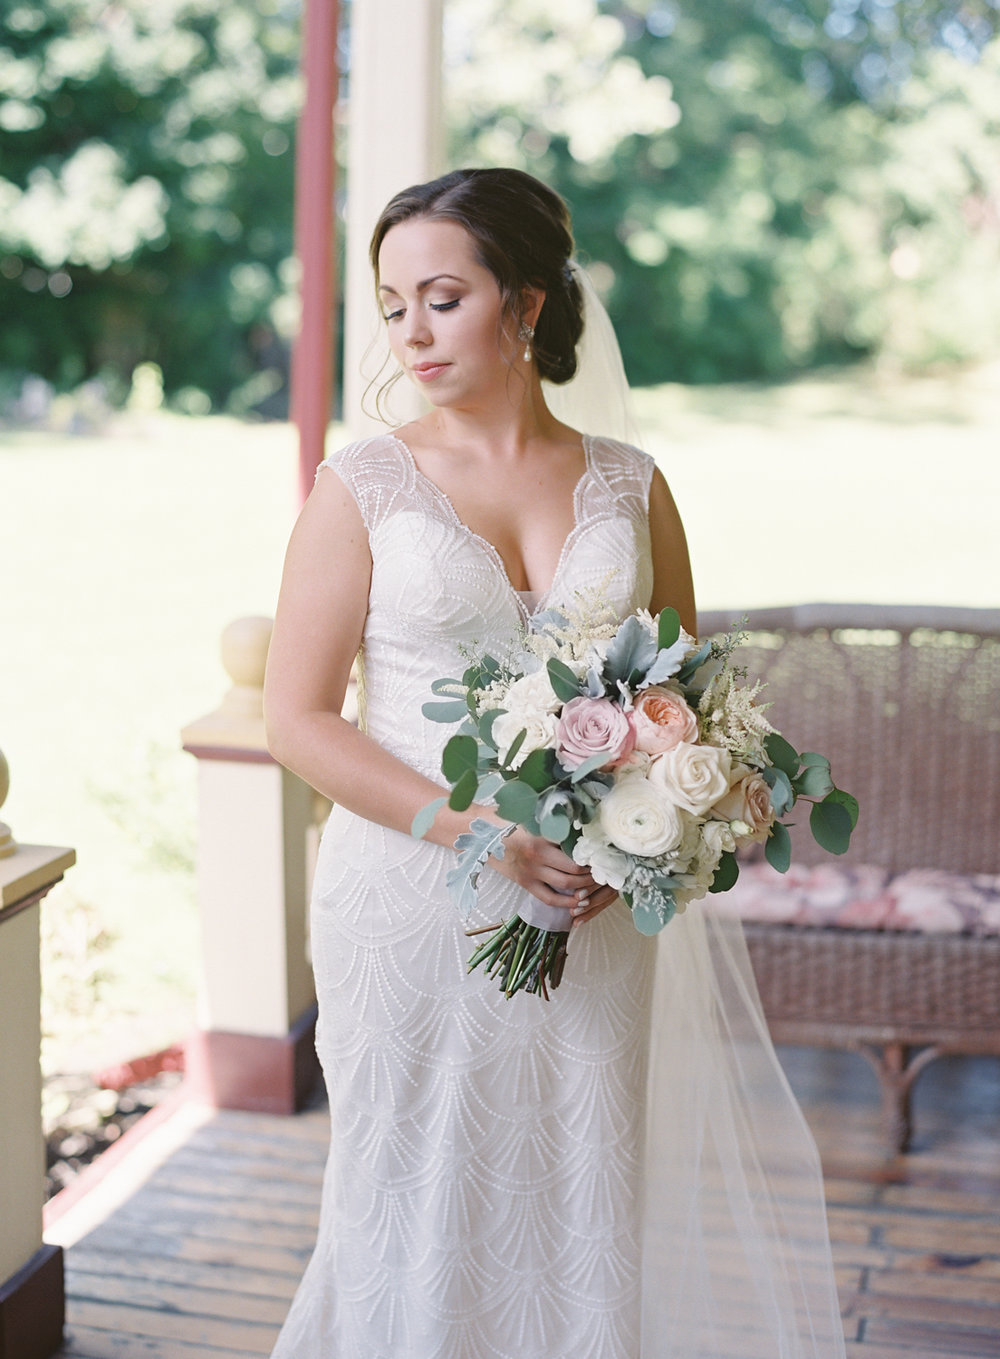 Lauren + James | Minas Basin Backyard Wedding - Journal